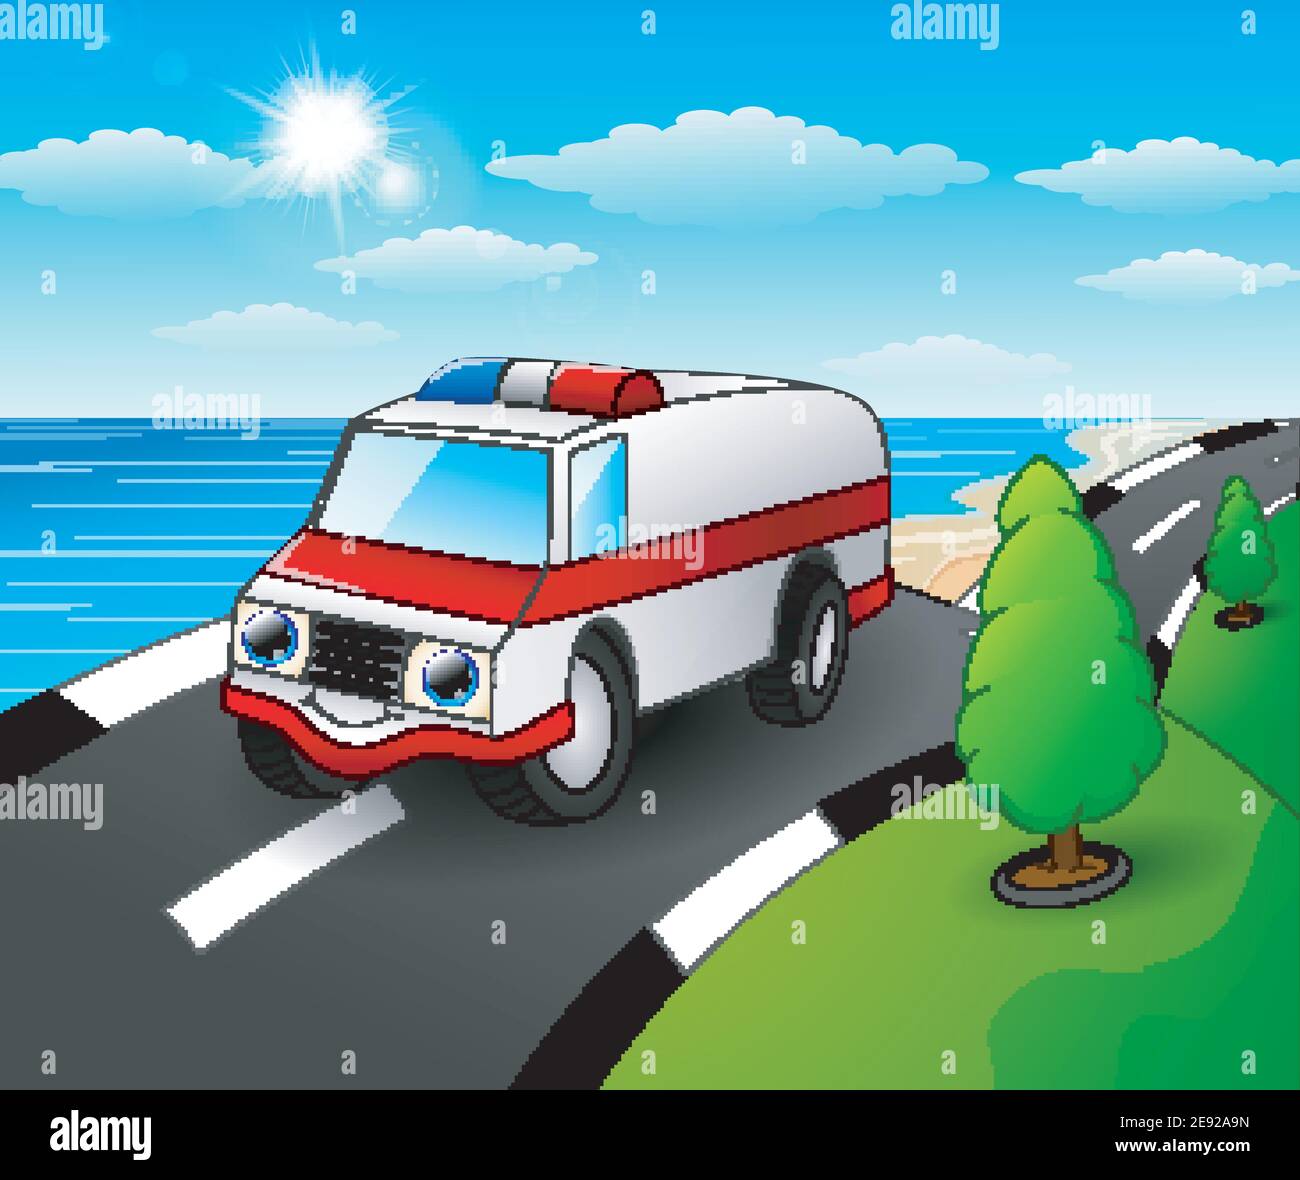 Vector illustration of Ambulance car cartoon in the seaside road Stock Vector